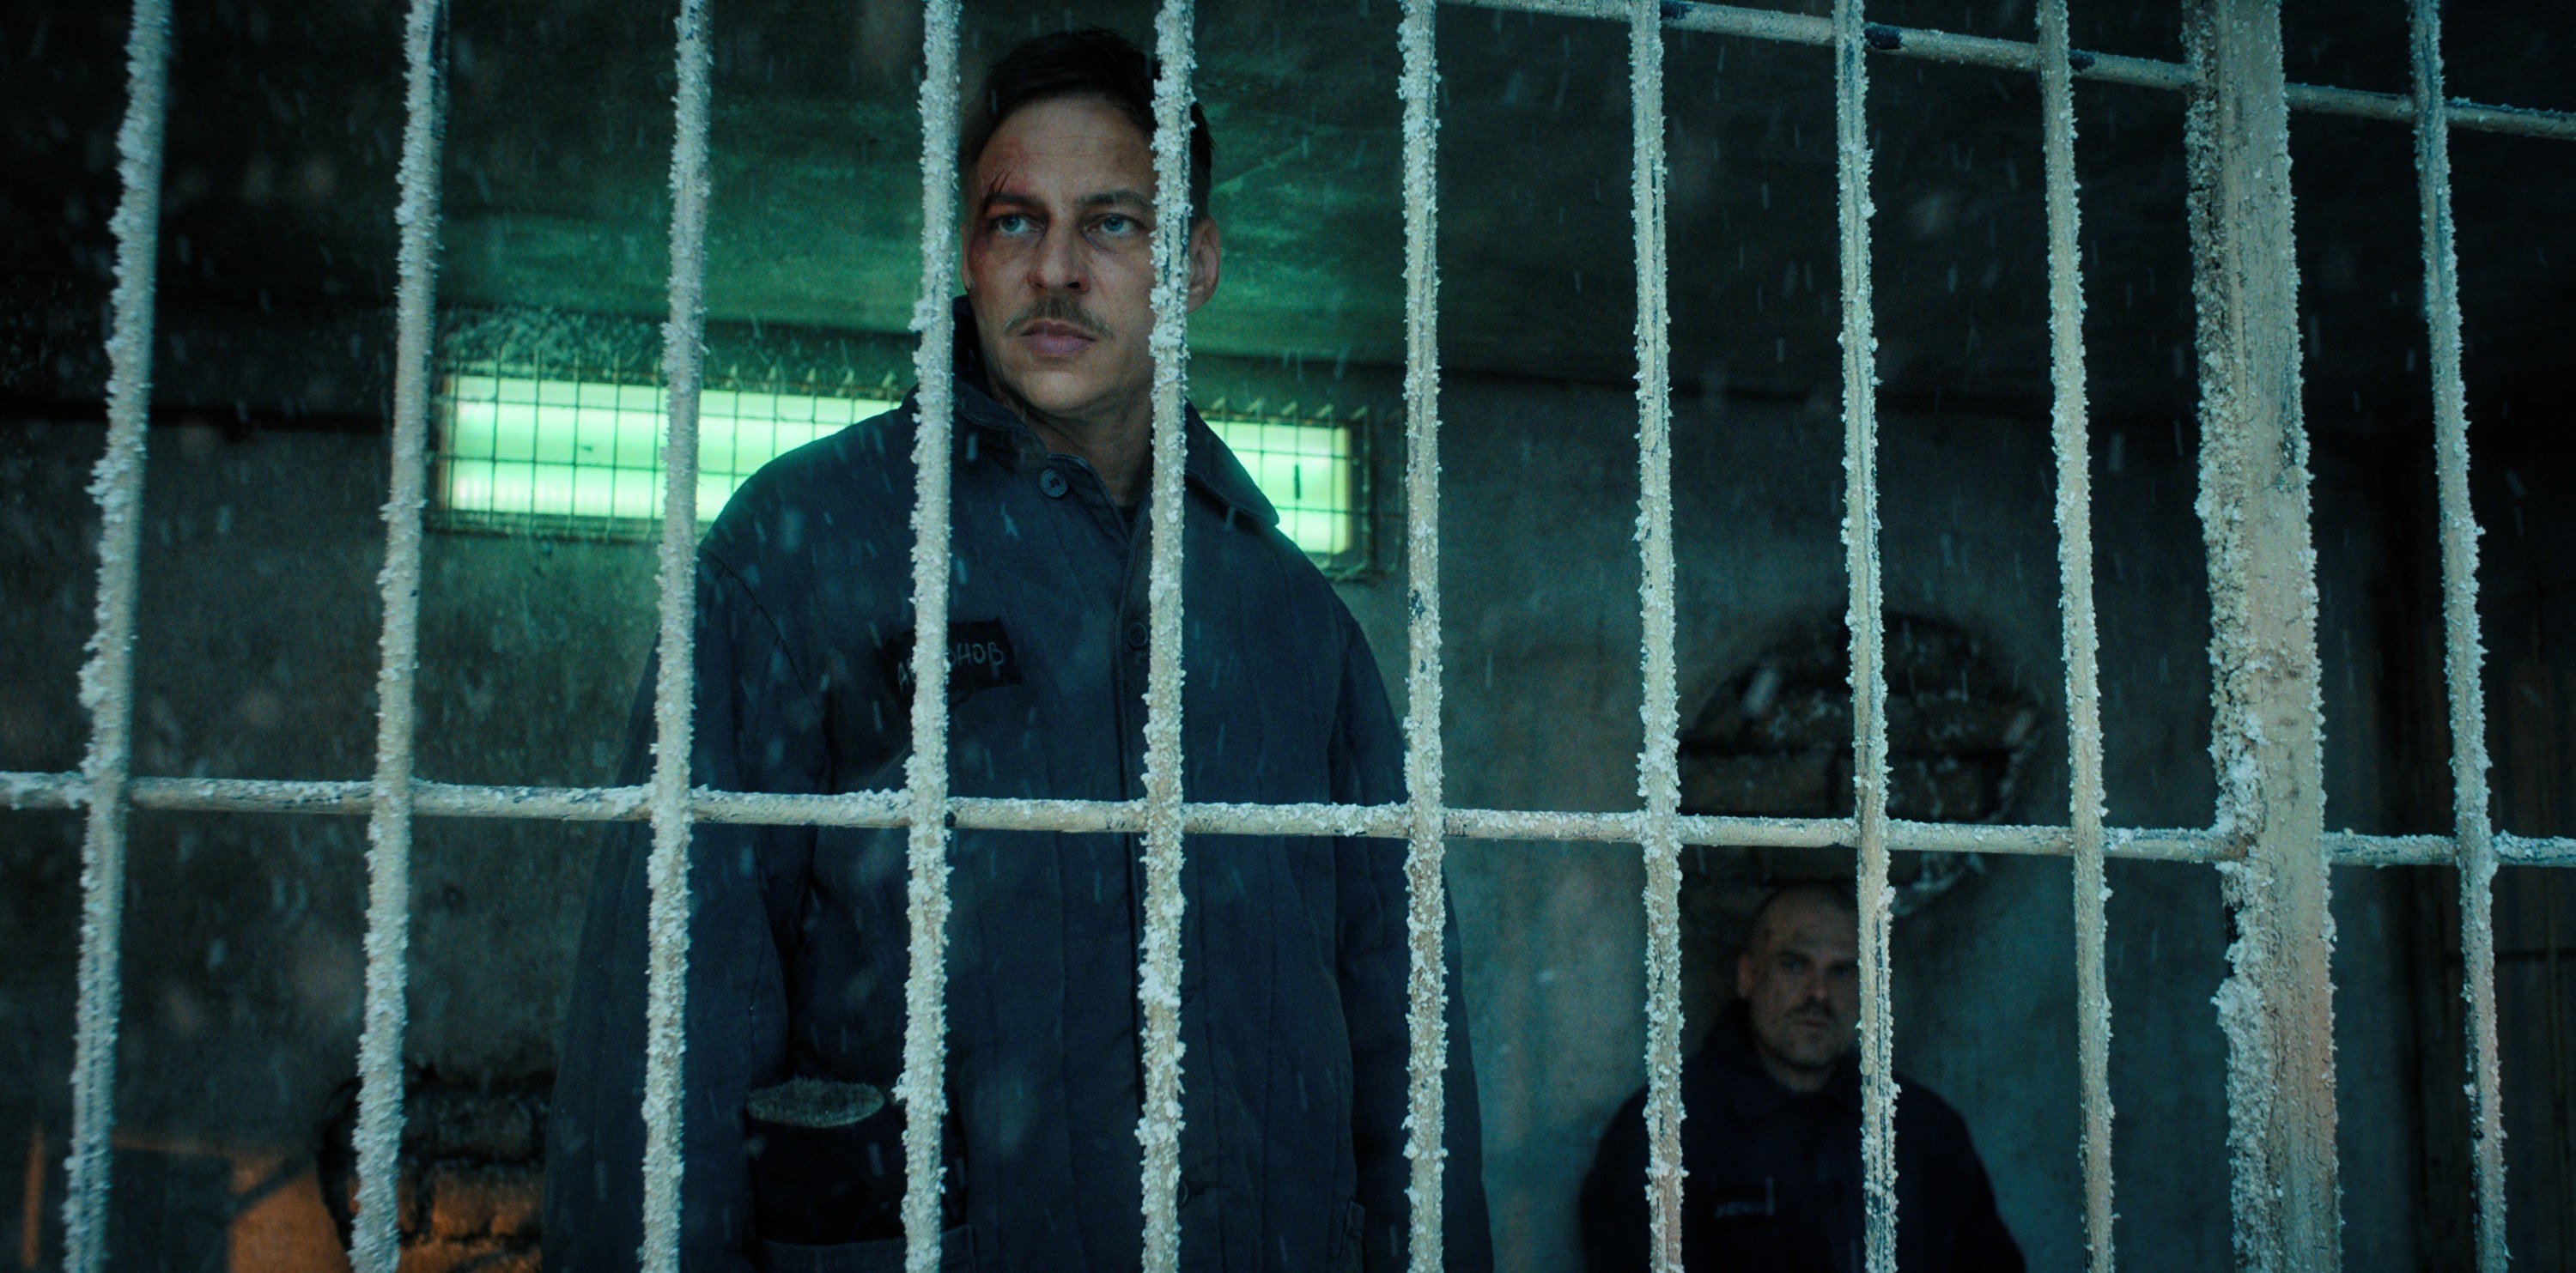 Dmitri wears a dark jumpsuit as he stands behind prison bars